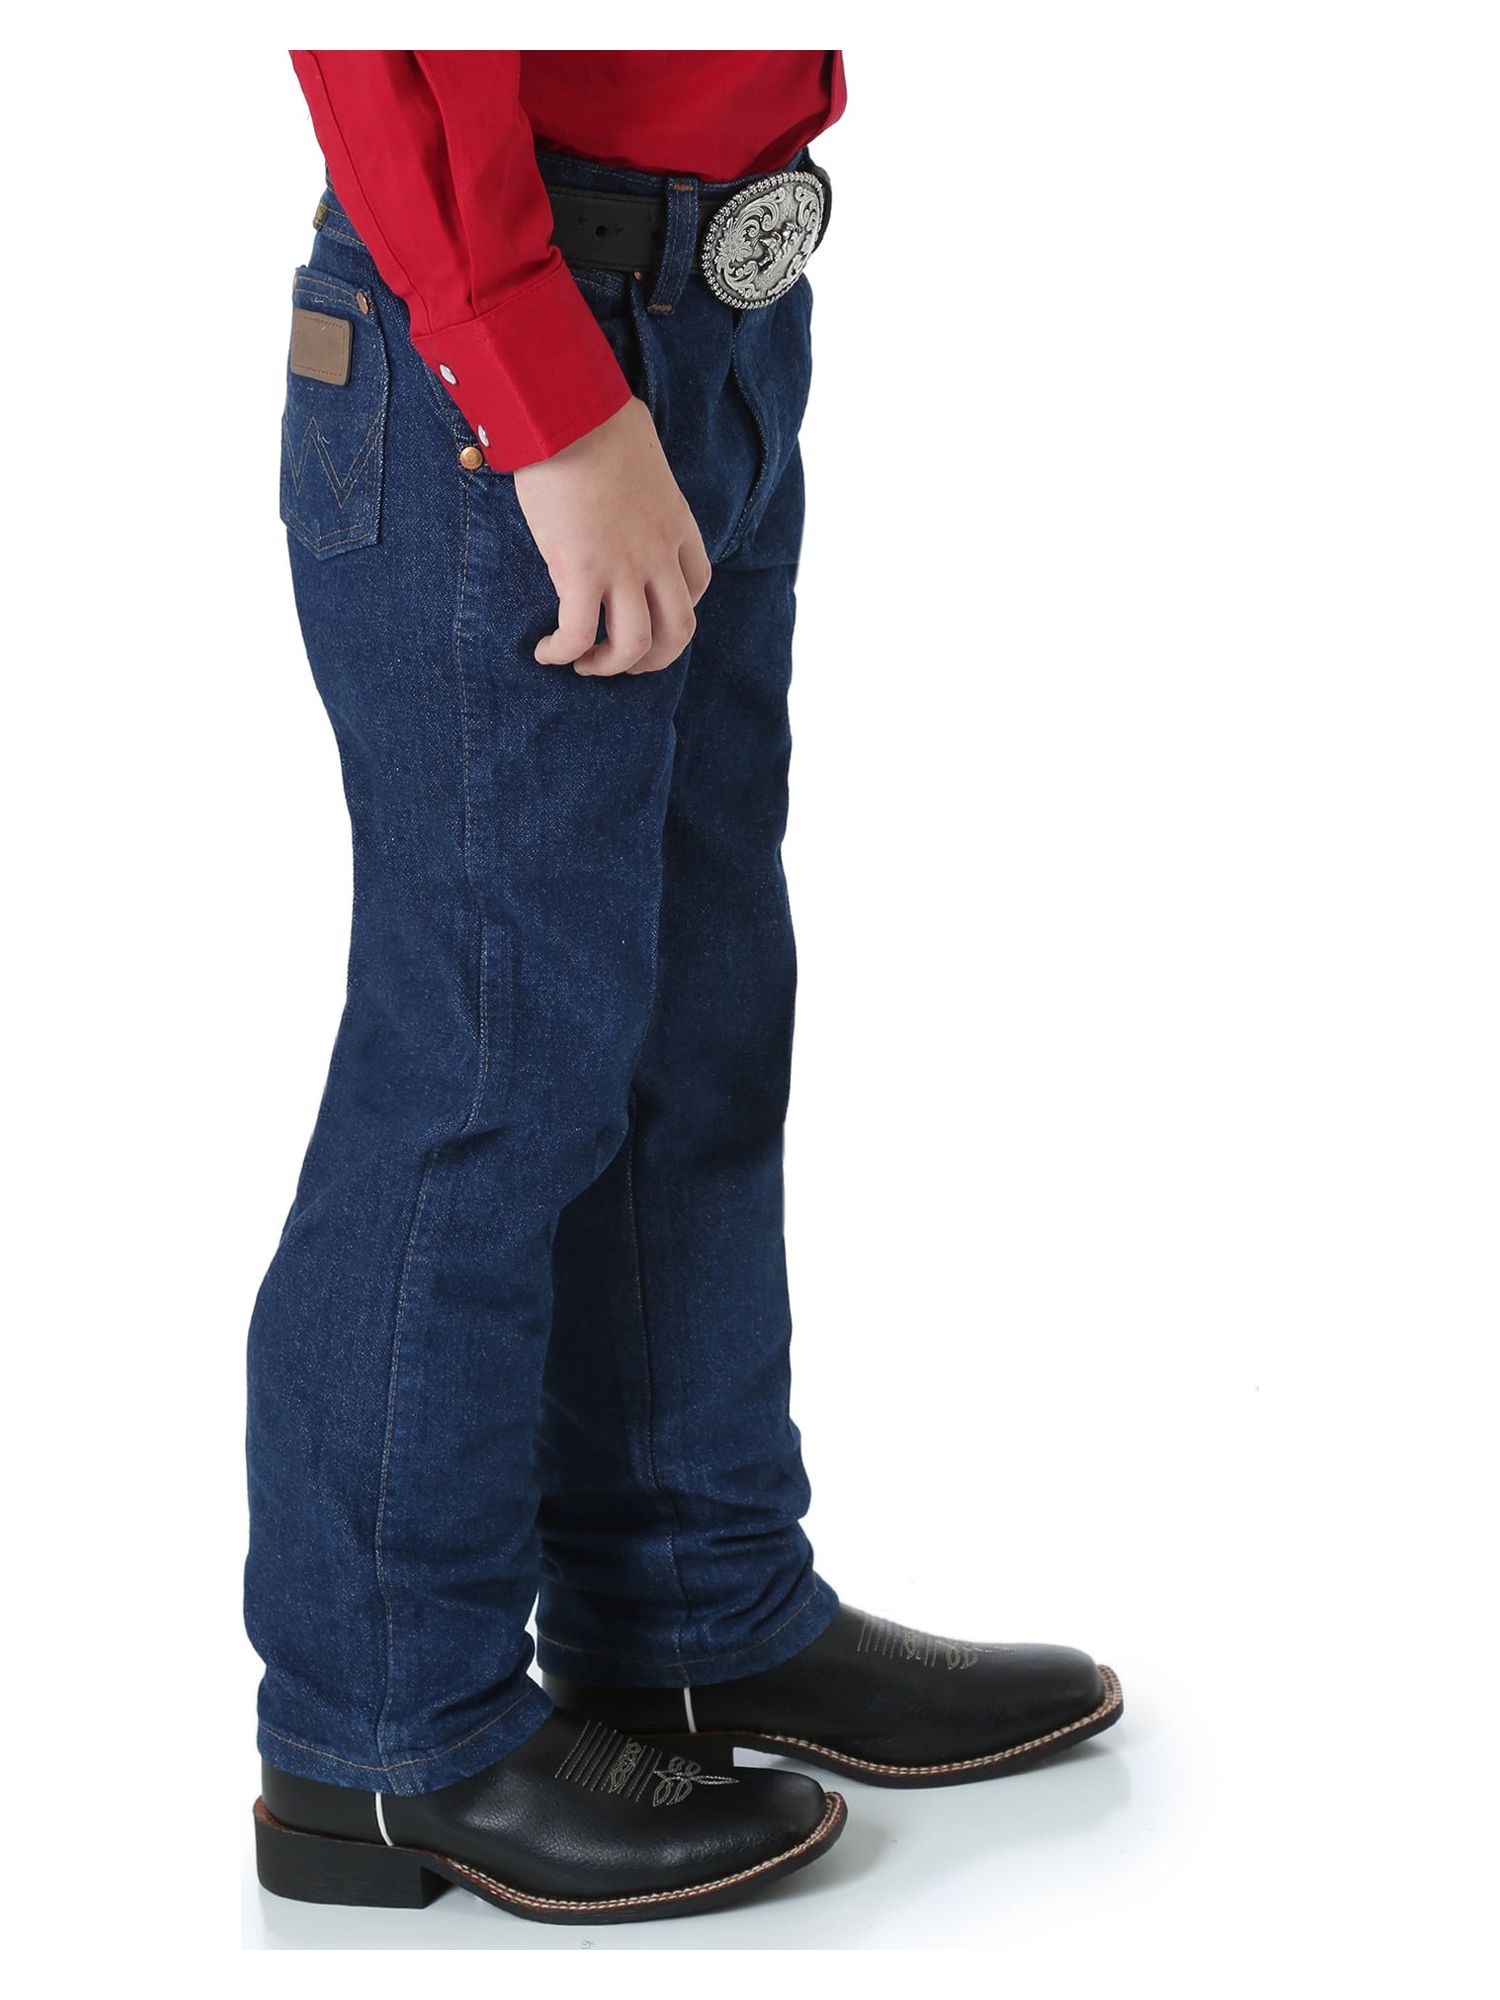 Wrangler Boys Cowboy Cut Original Fit Jeans, Sizes 4-16 - image 3 of 4